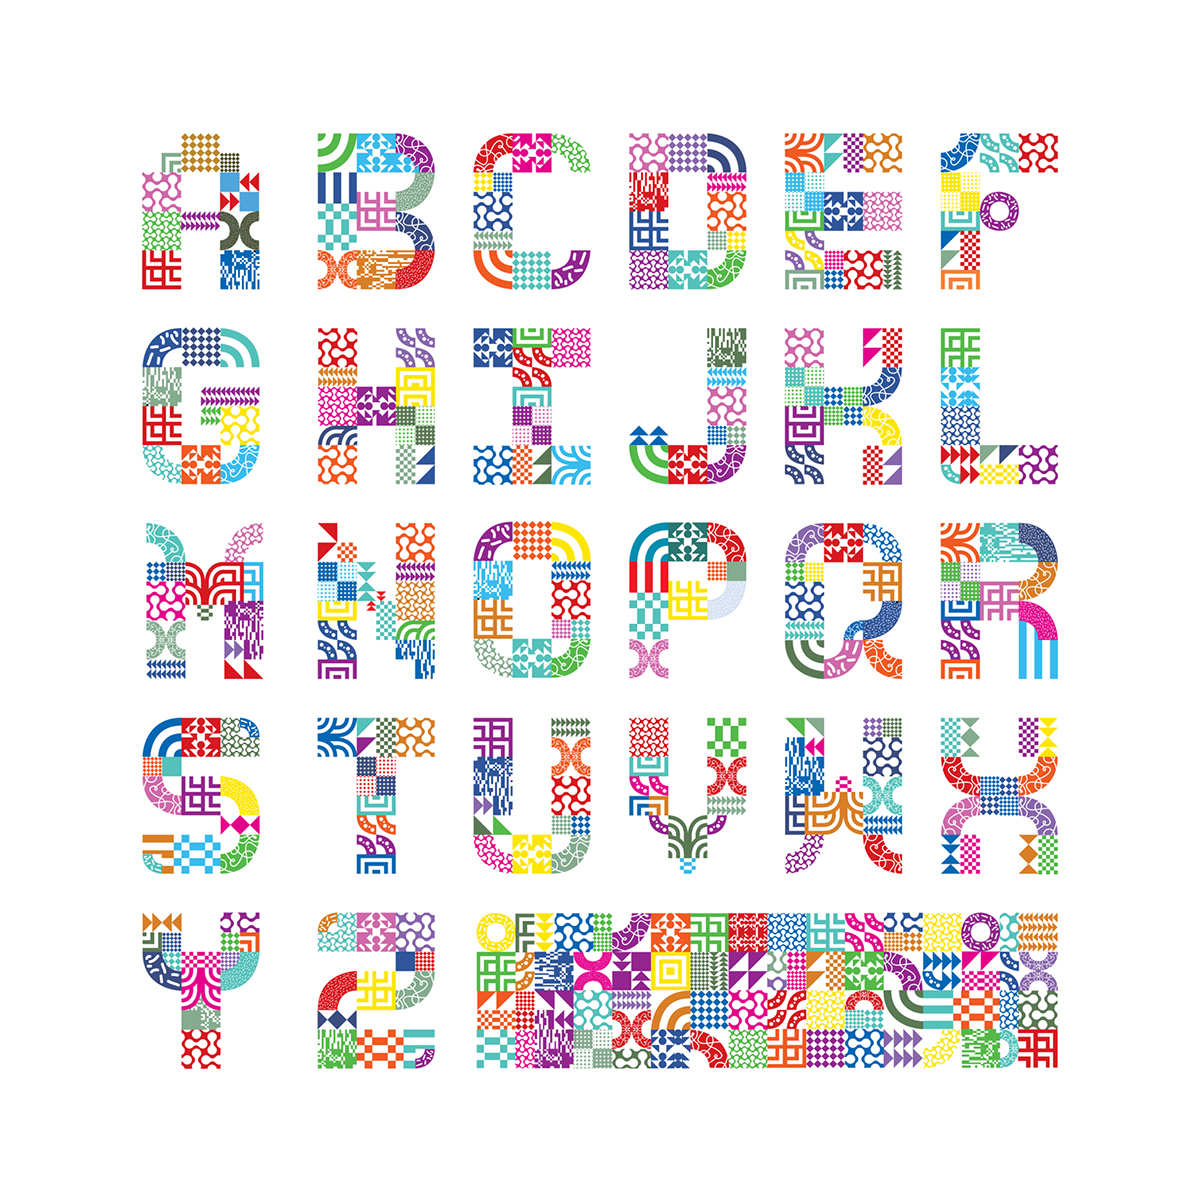 modular monospace experimental typo pattern black and white colorful Playful